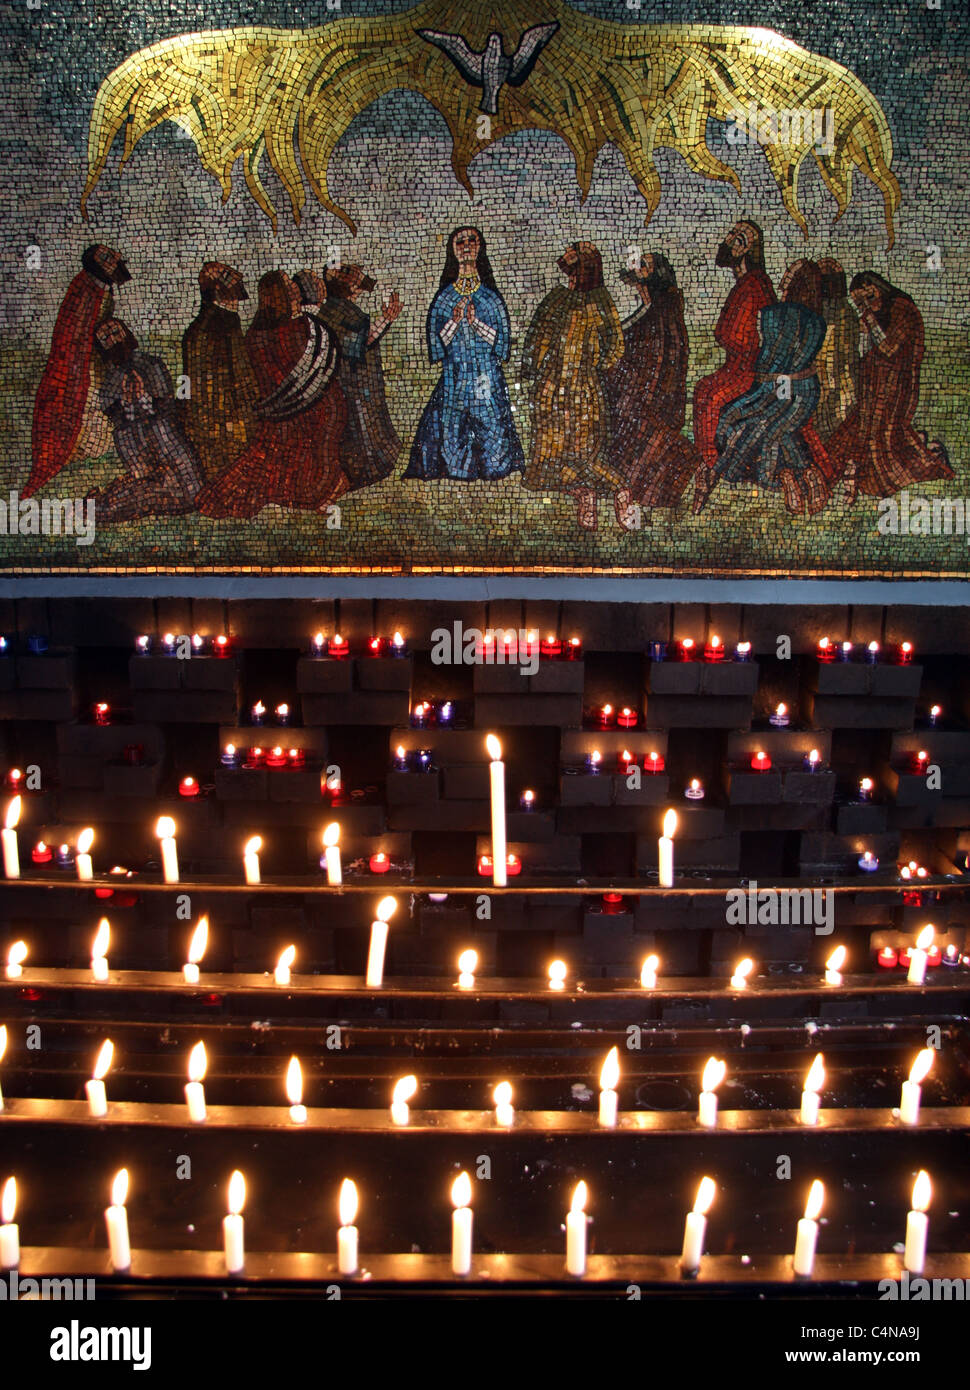 inneren Mosaikbild und Kerzen in Pantoffel Kapelle römisch-katholischen Walsingham Norfolk England UK Pilgerfahrt Website Ziel Stockfoto